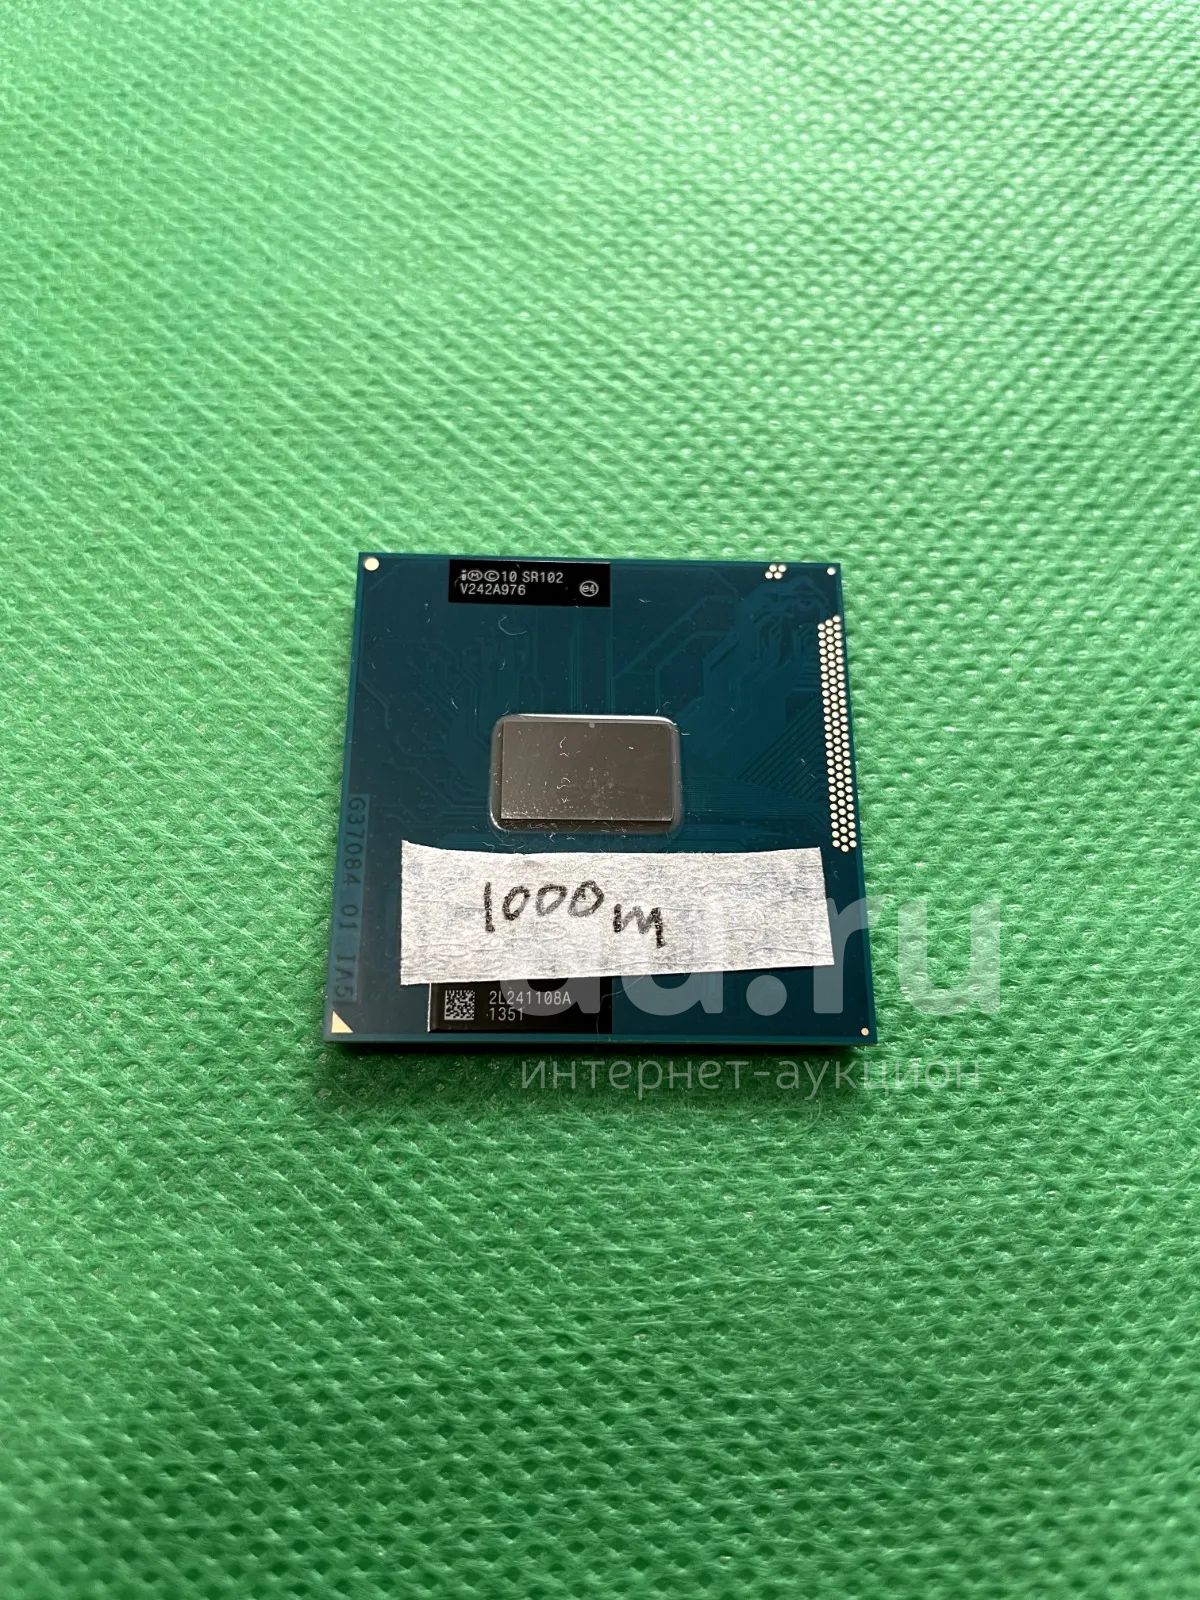 Intel Celeron 1000m. Celeron 1000m